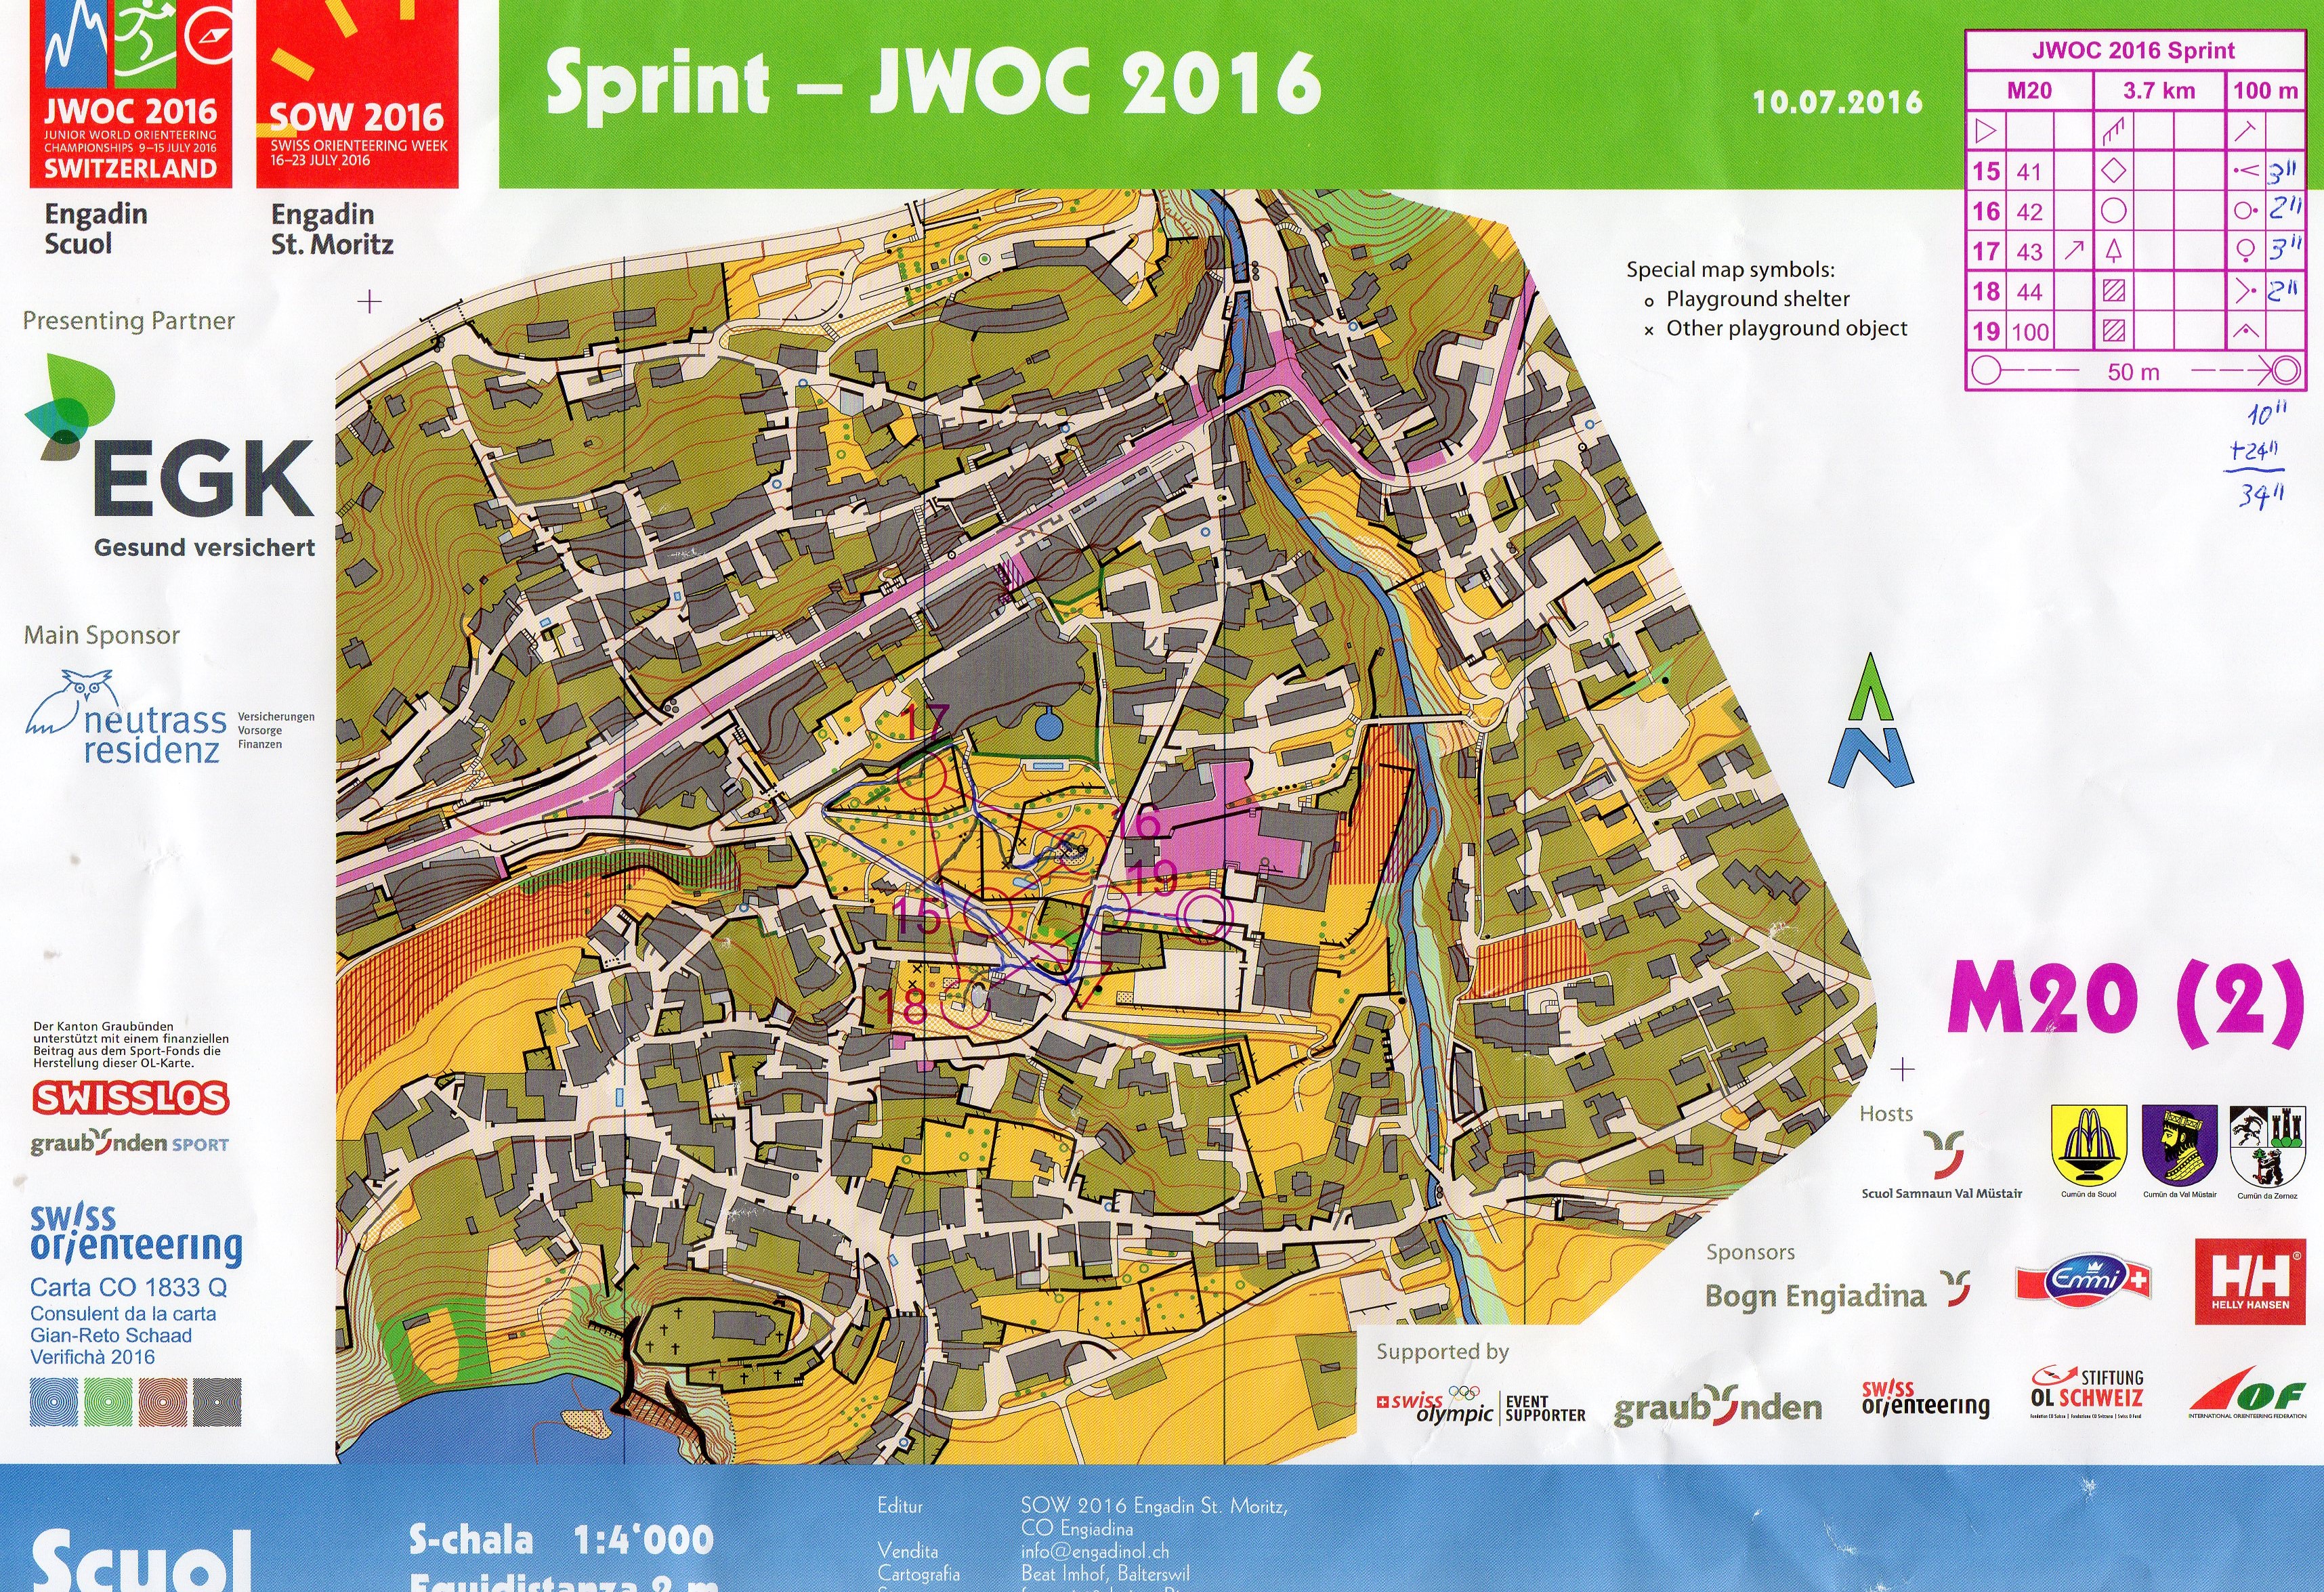 JWOC Sprint part 2 (10-07-2016)